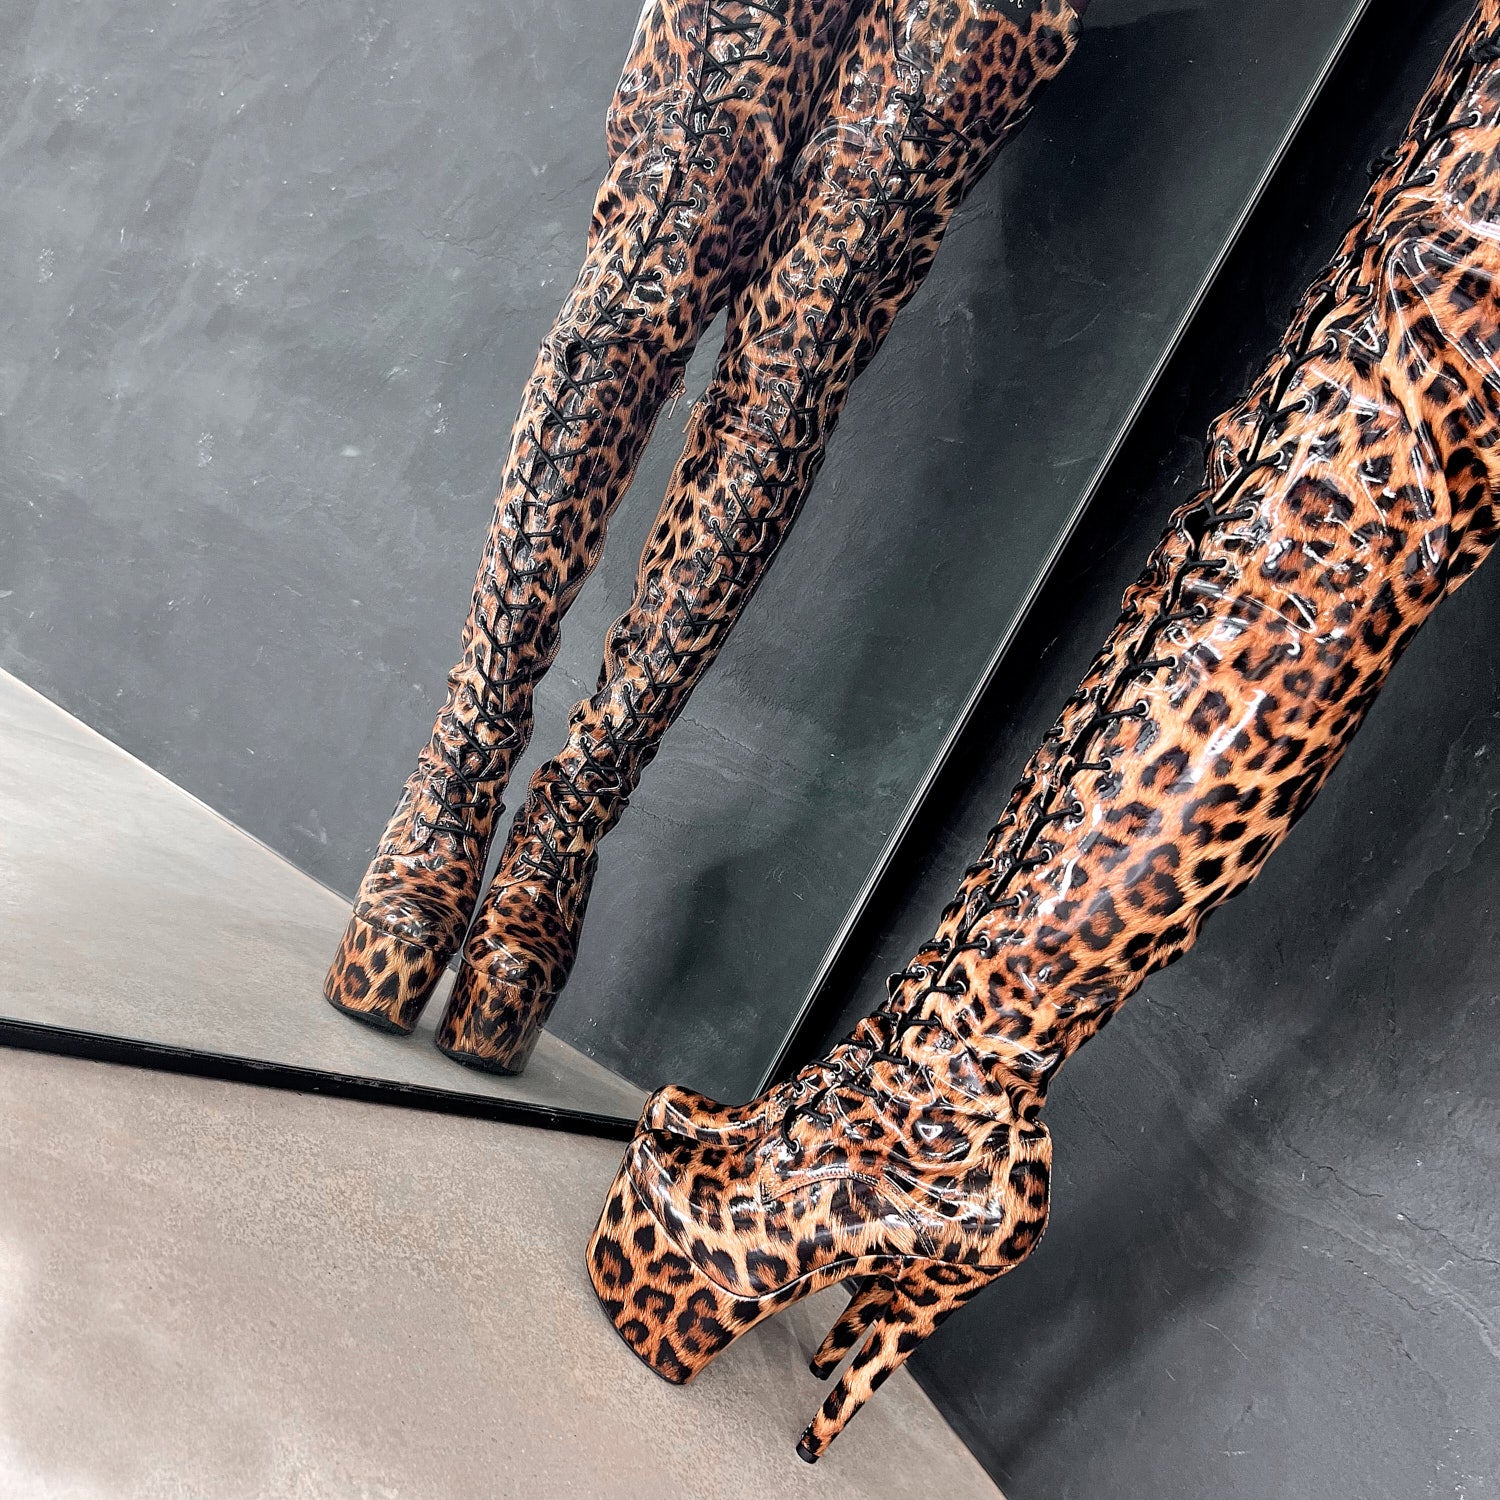 Leopard Thigh High - 7 INCH + SP, stripper shoe, stripper heel, pole heel, not a pleaser, platform, dancer, pole dance, floor work